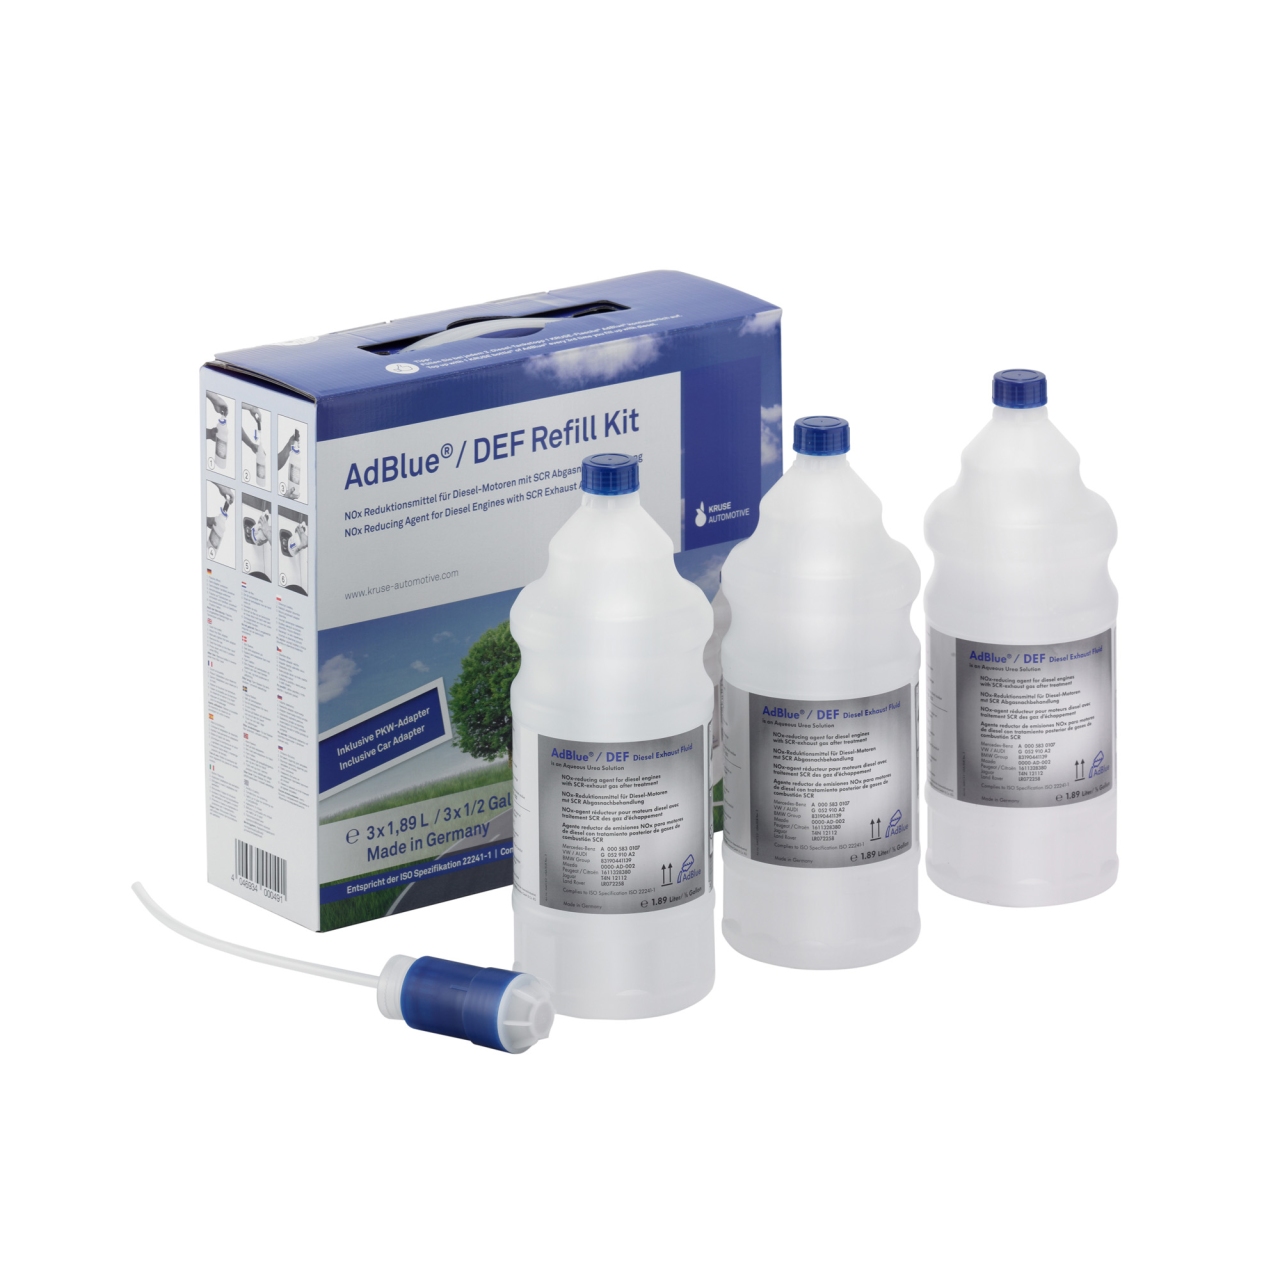 KRUSE Adblue urea solution refill kit 3 x 1.89 liters for car filling 1003803893500